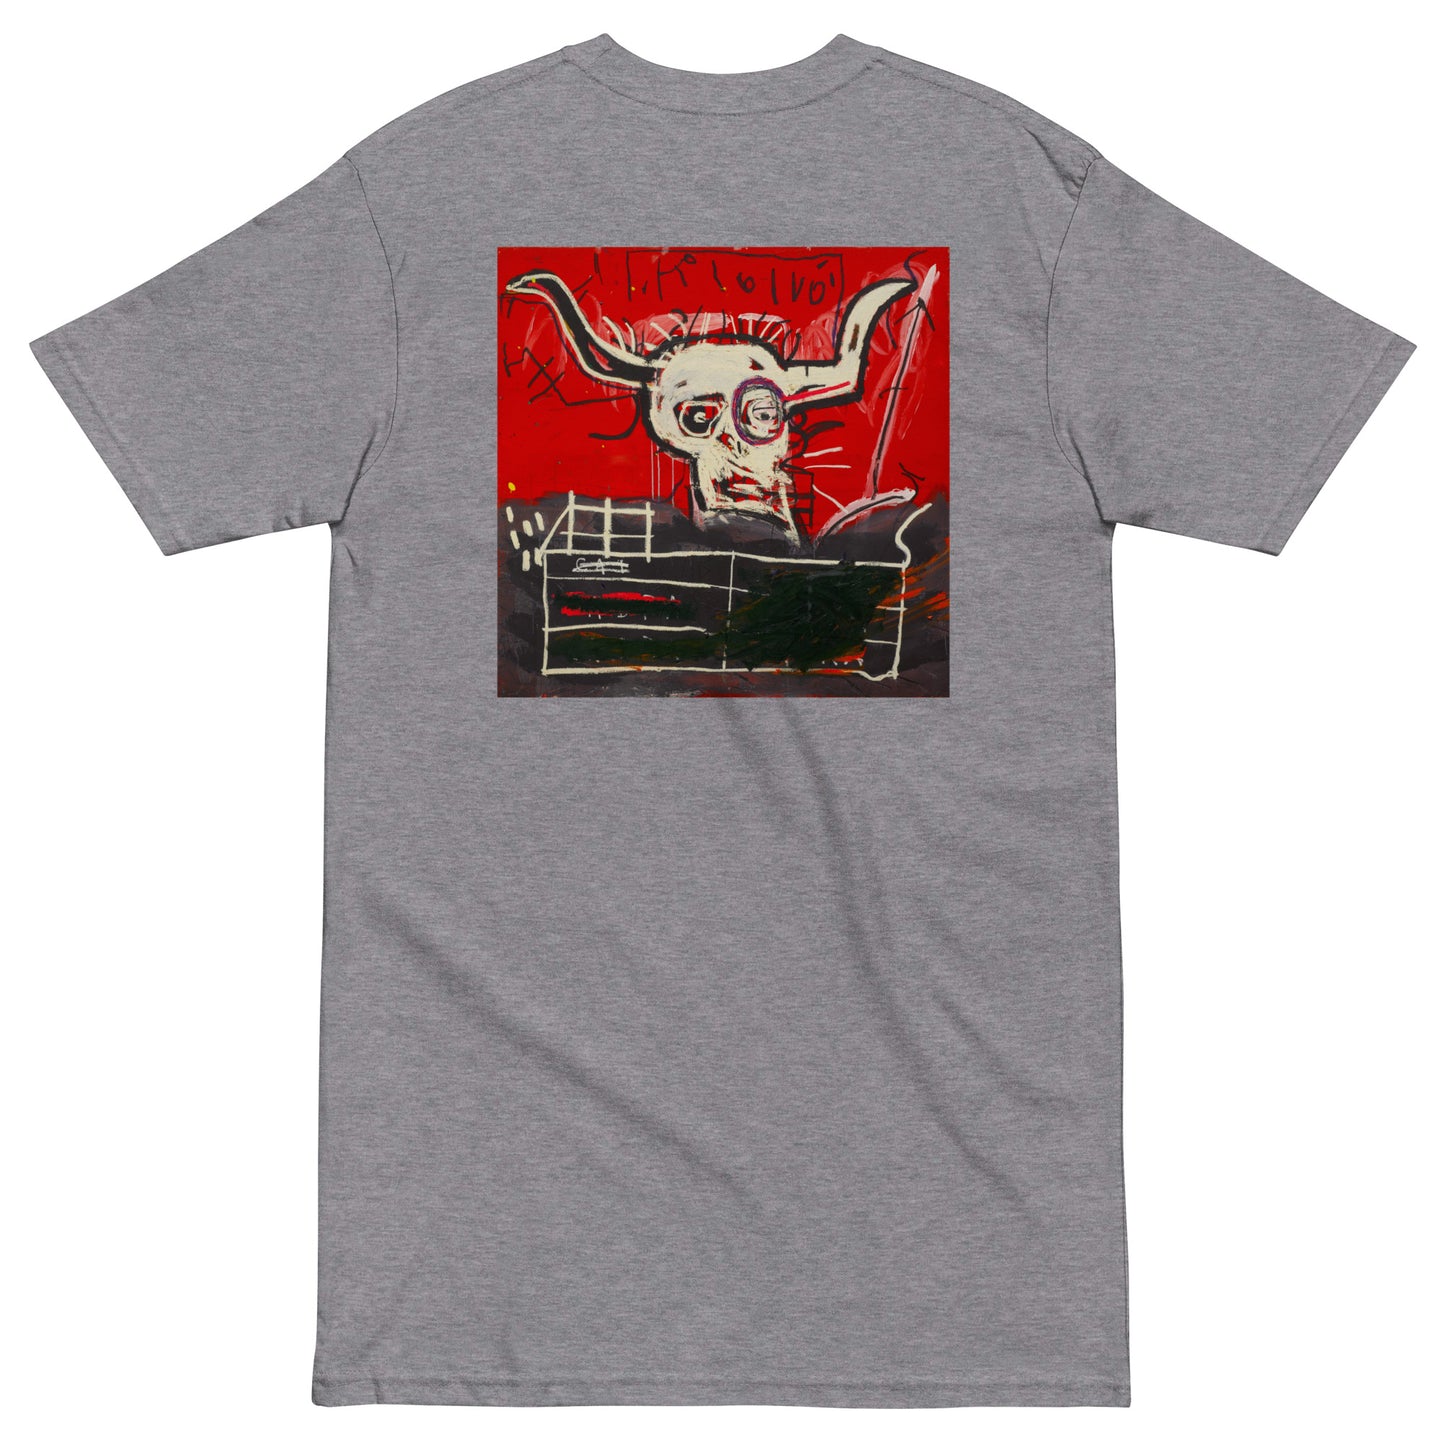 Jean-Michel Basquiat "Cabra" Artwork Printed Premium Streetwear Crewneck T-shirt Grey